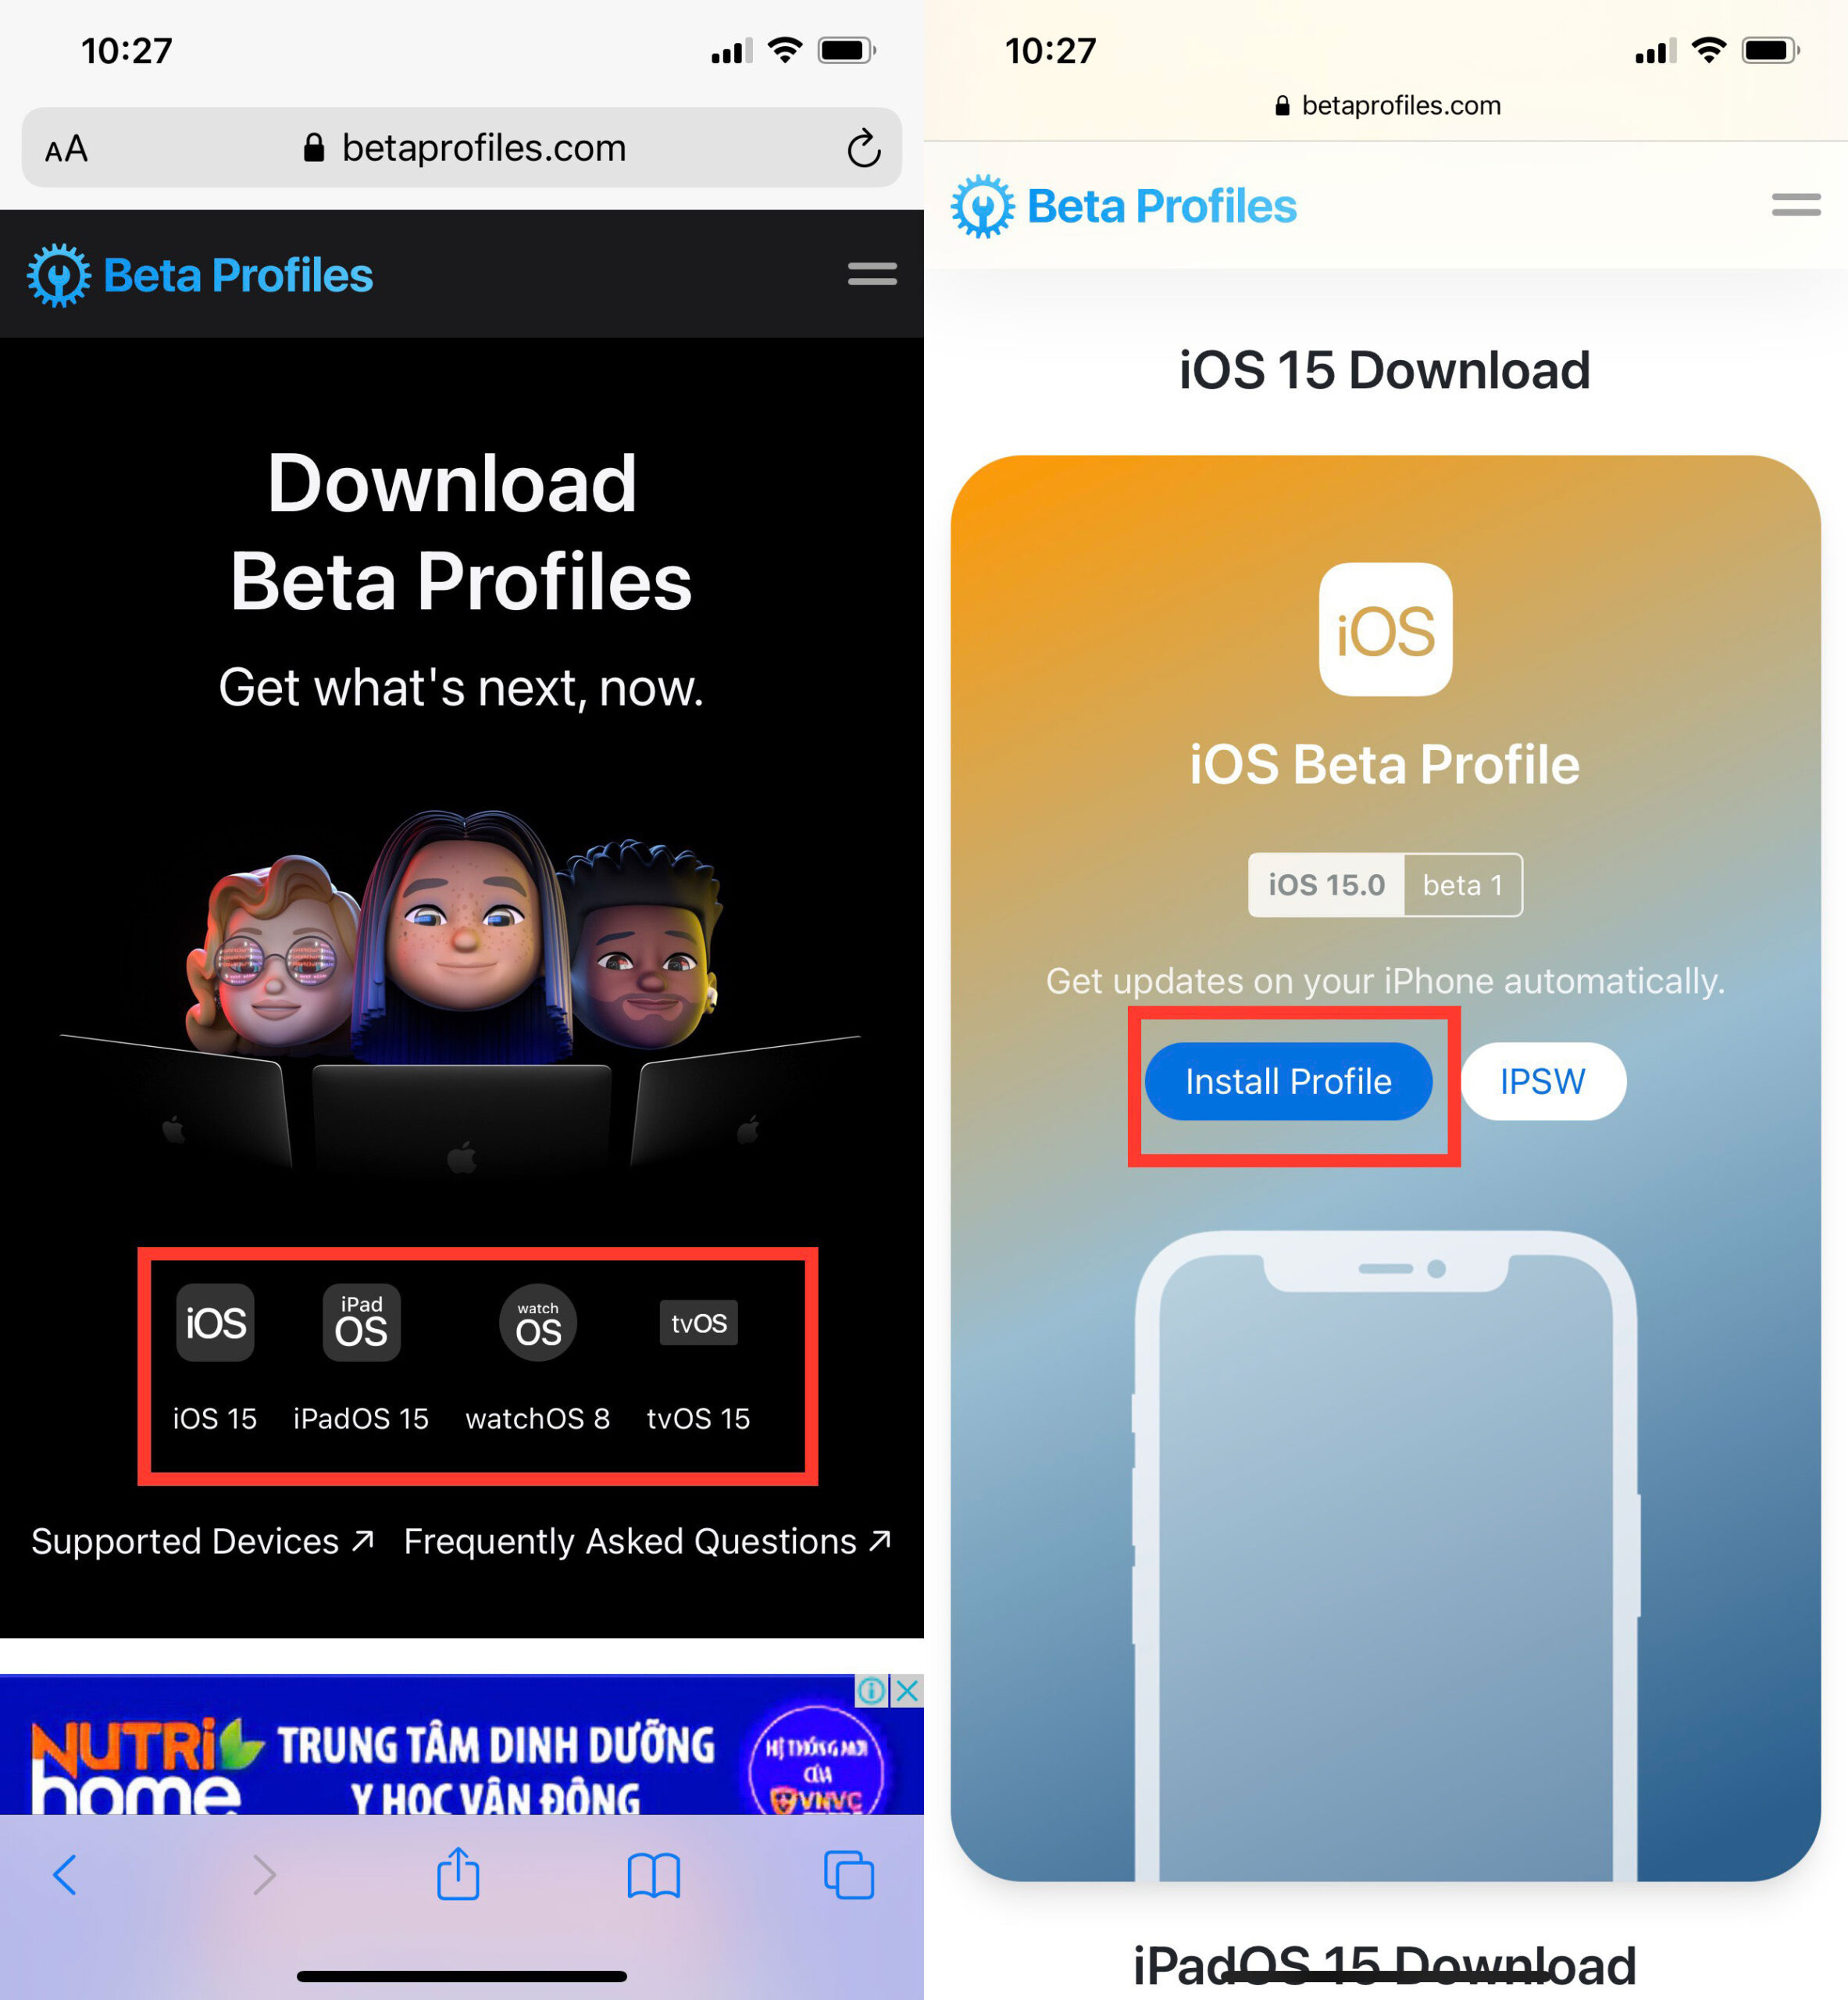 apple ios 10 beta profile download